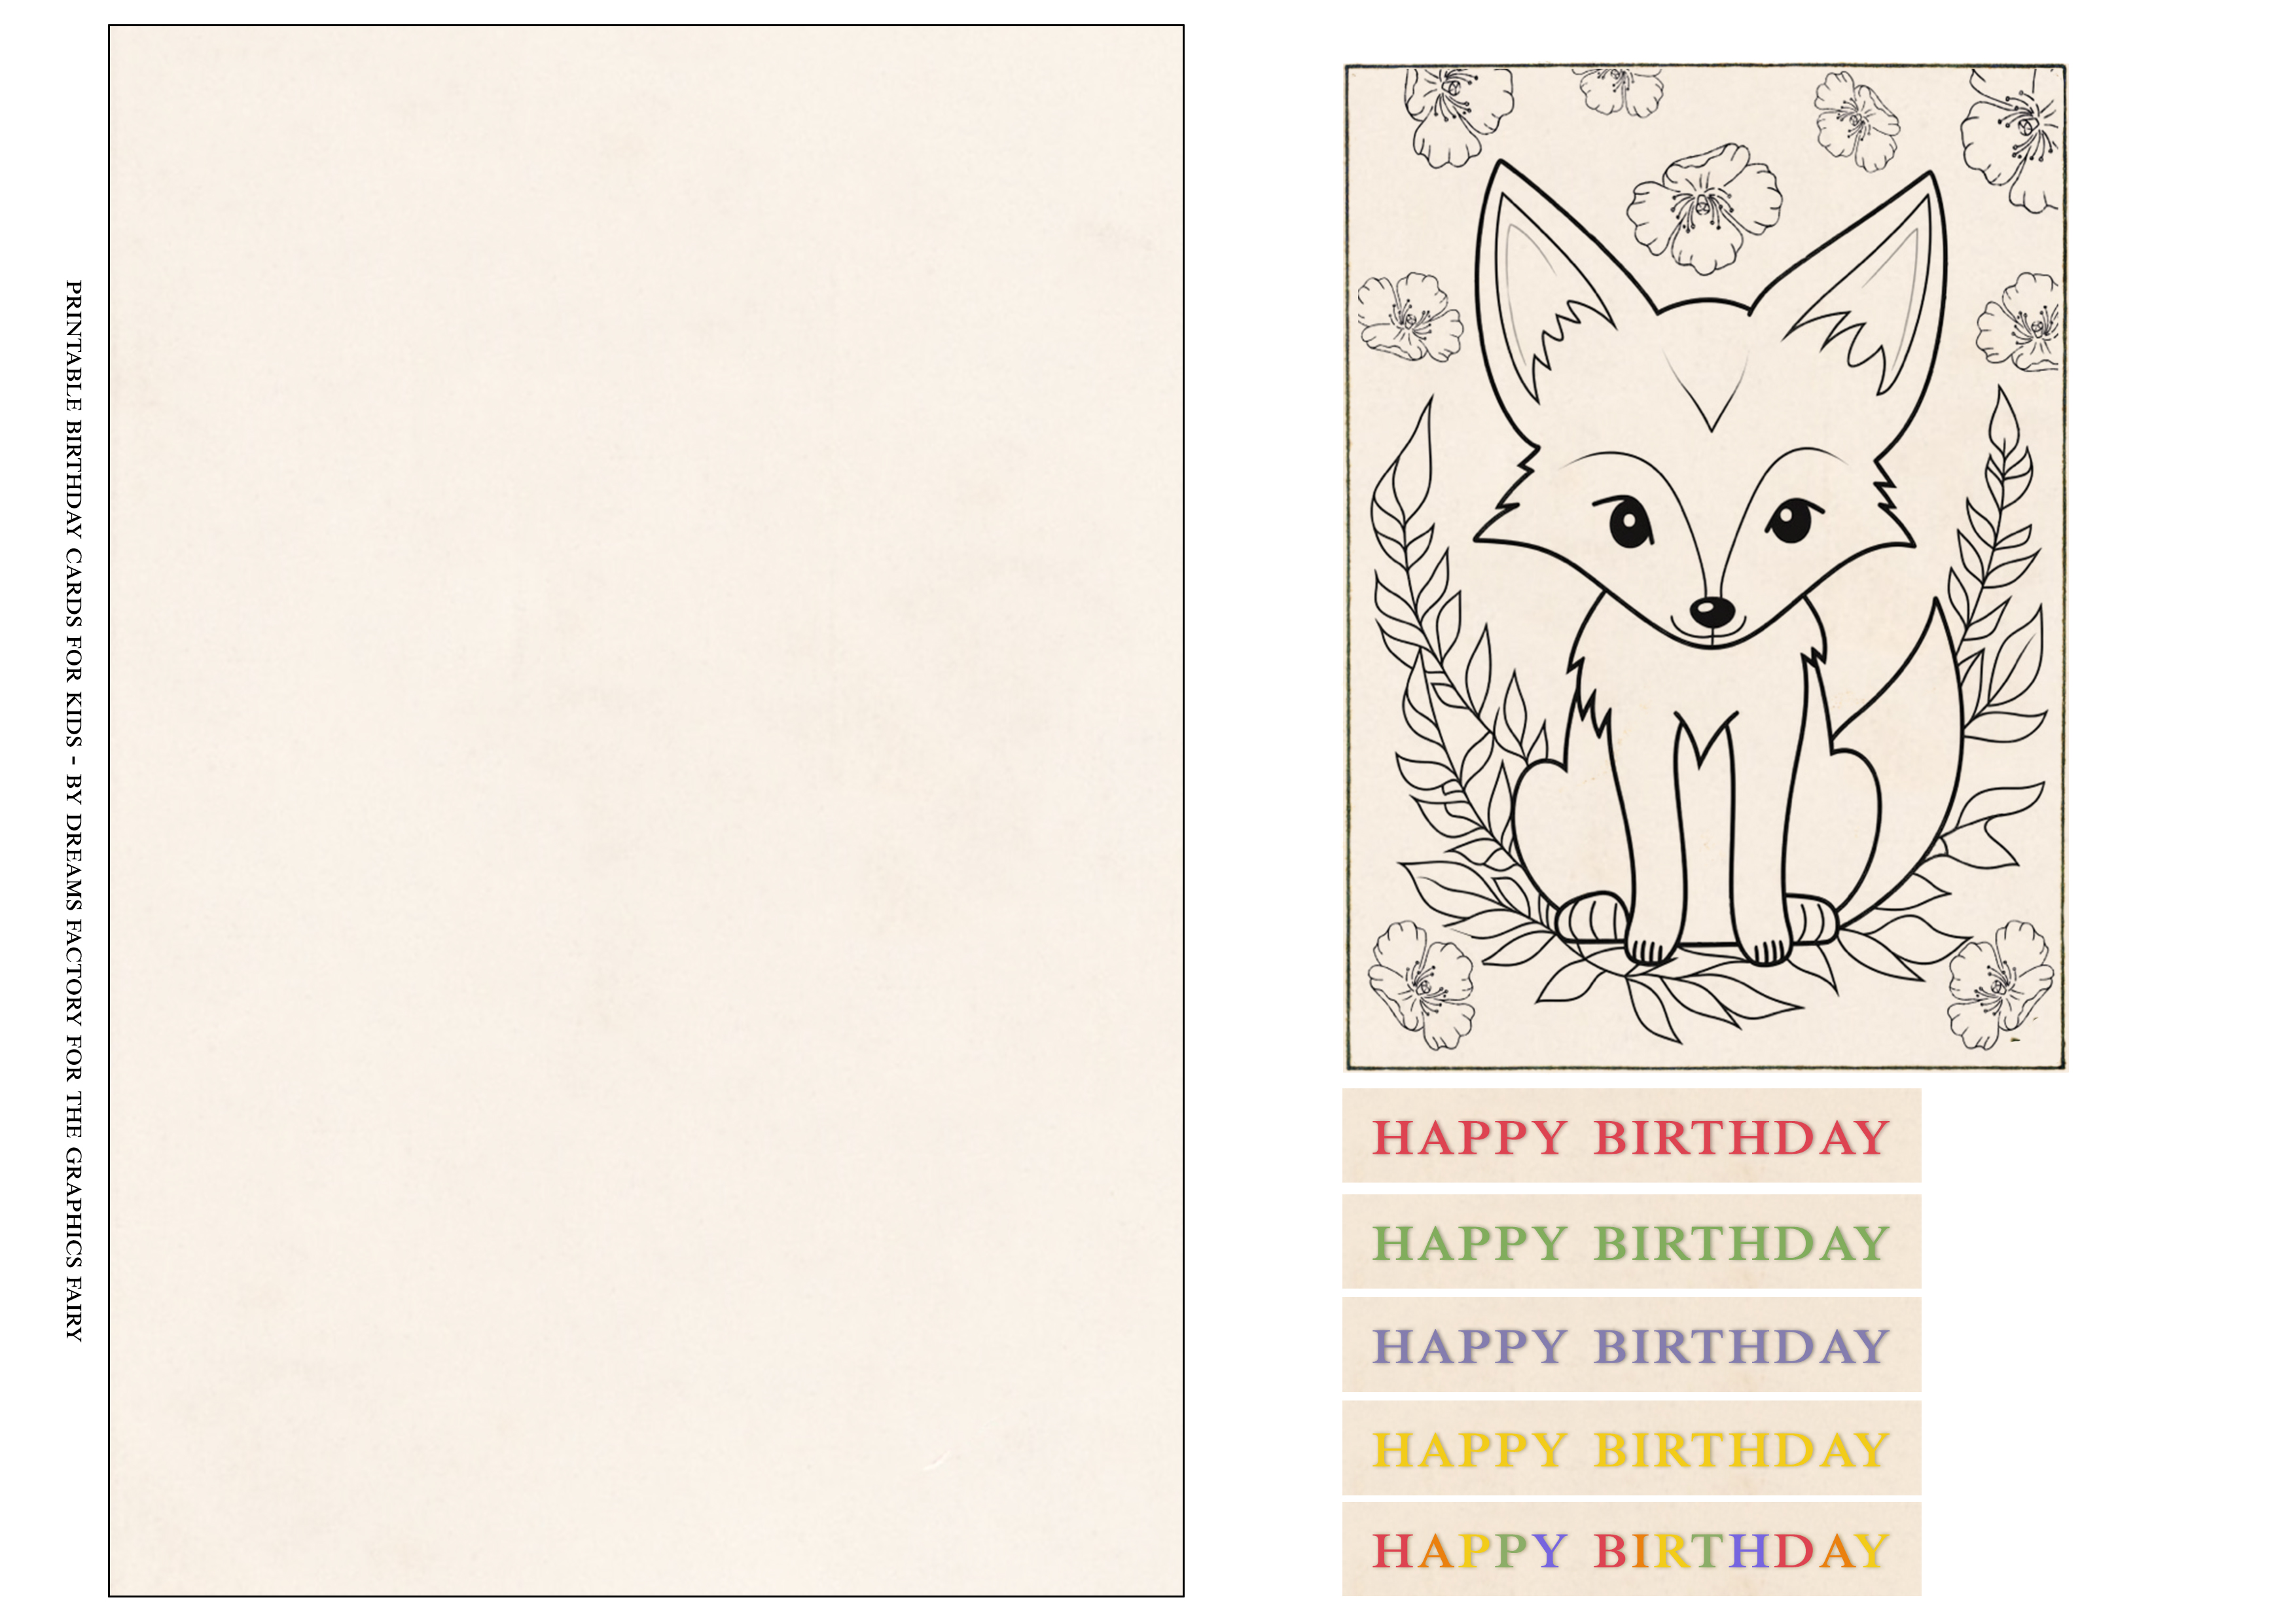 Printable birthday cards for kids